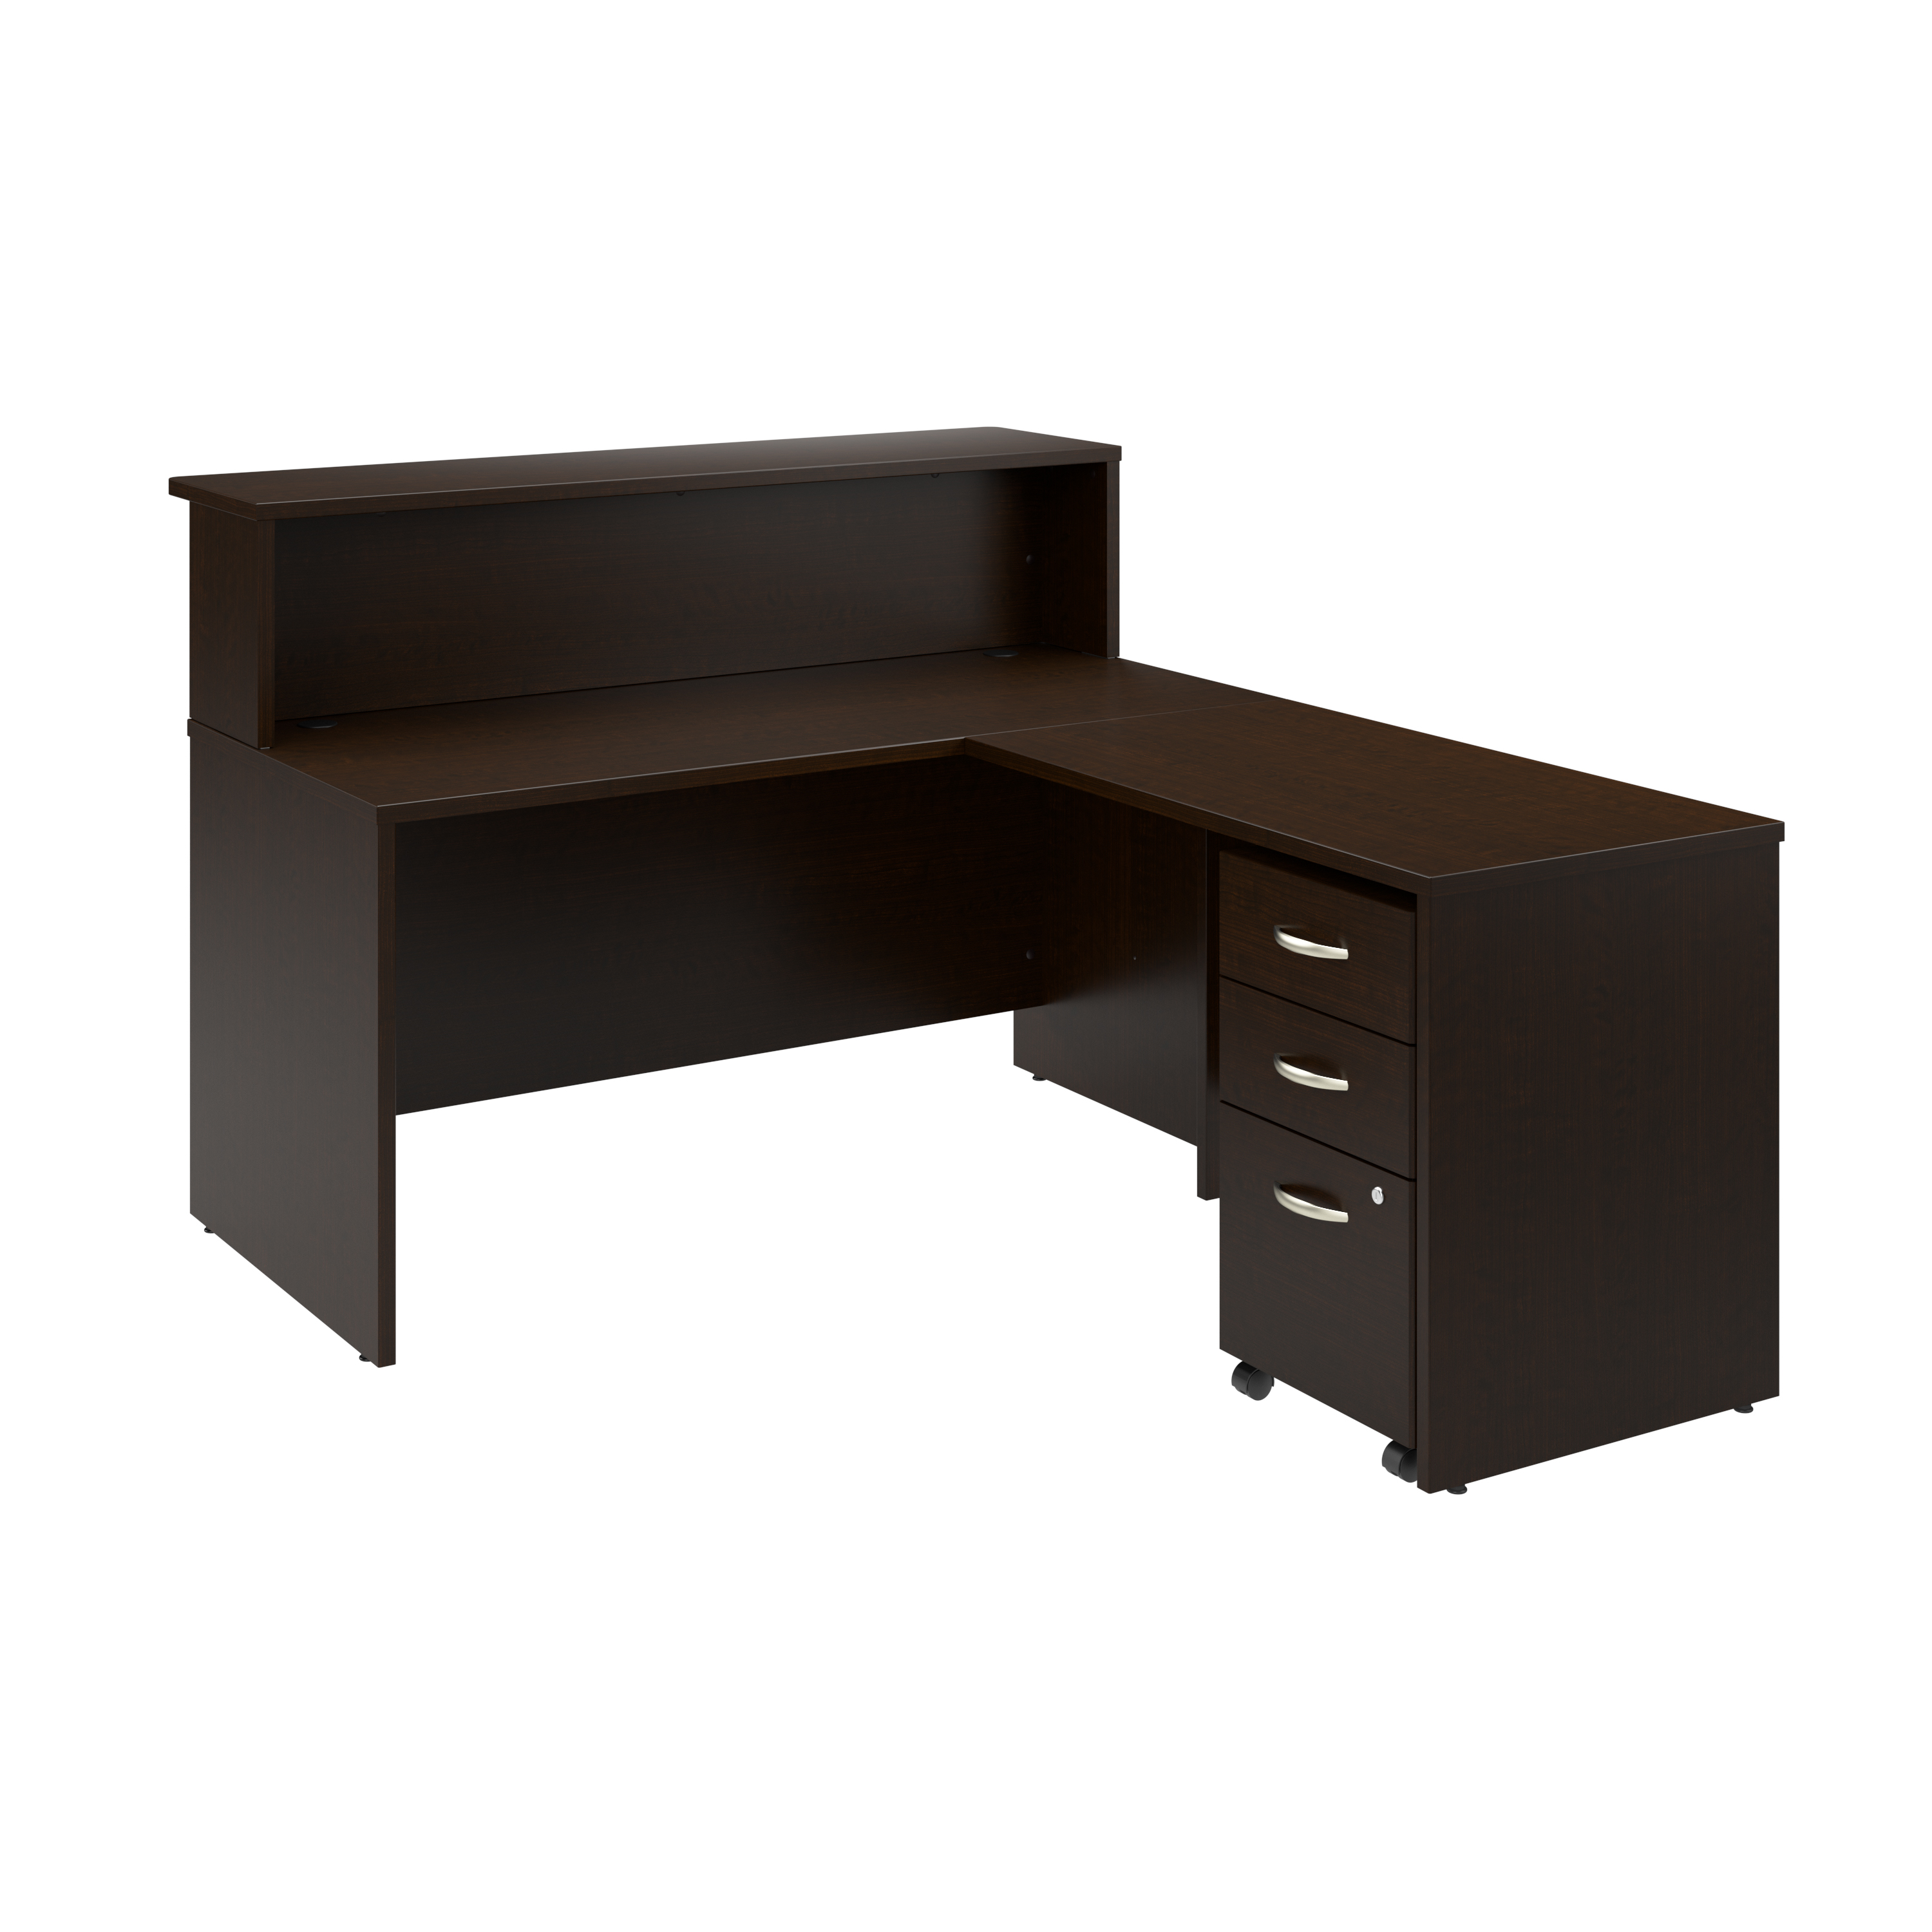 Shop Bush Business Furniture Arrive 60W x 72D L Shaped Reception Desk with Shelf and Mobile File Cabinet 02 ARV004MR #color_mocha cherry